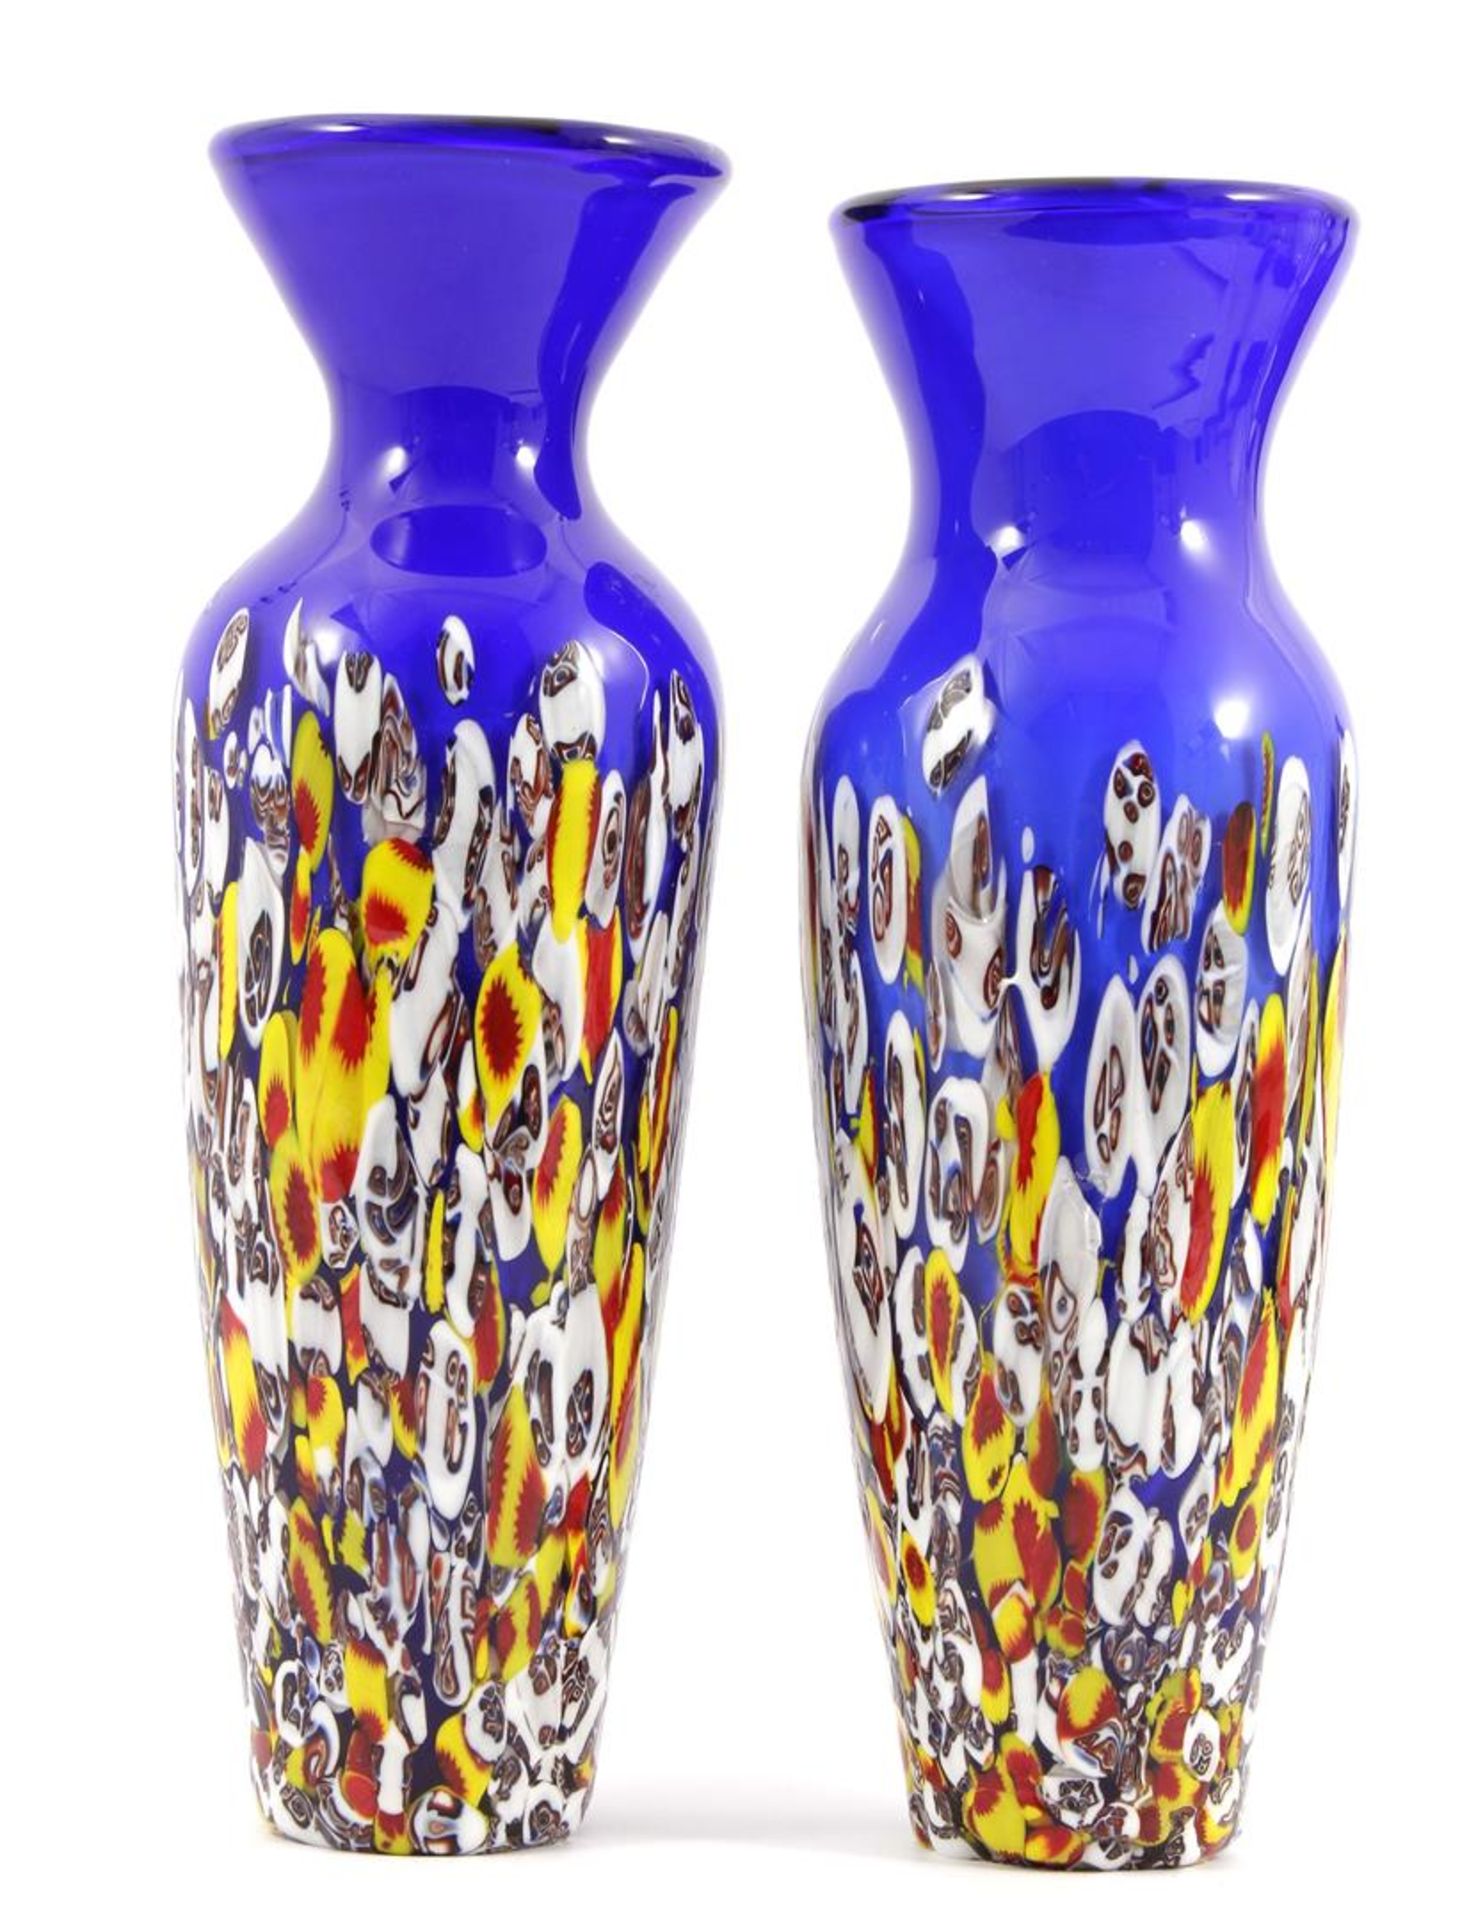 2 millefiori colored glass vases 37.5 cm high